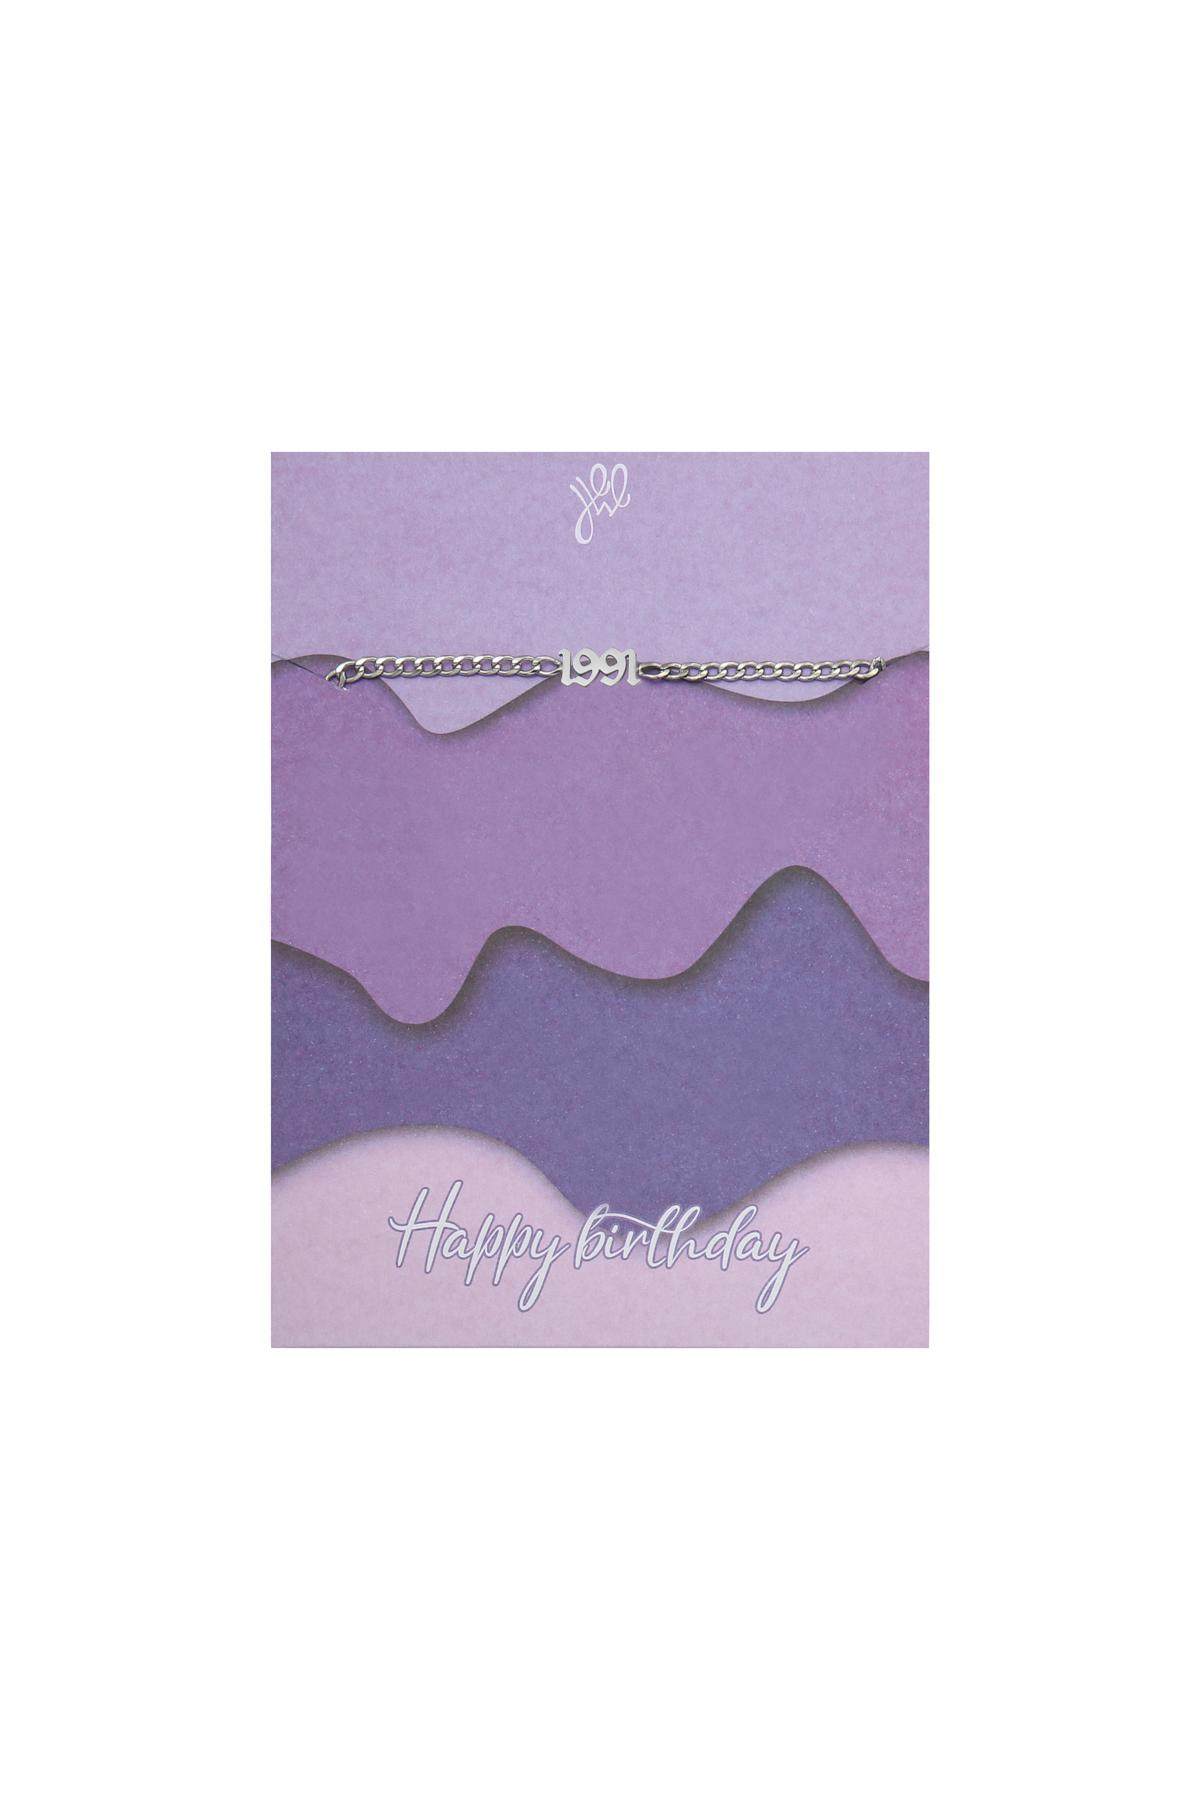 Silver / Bracelet Happy Birthday Years - 1991 Silver Stainless Steel 